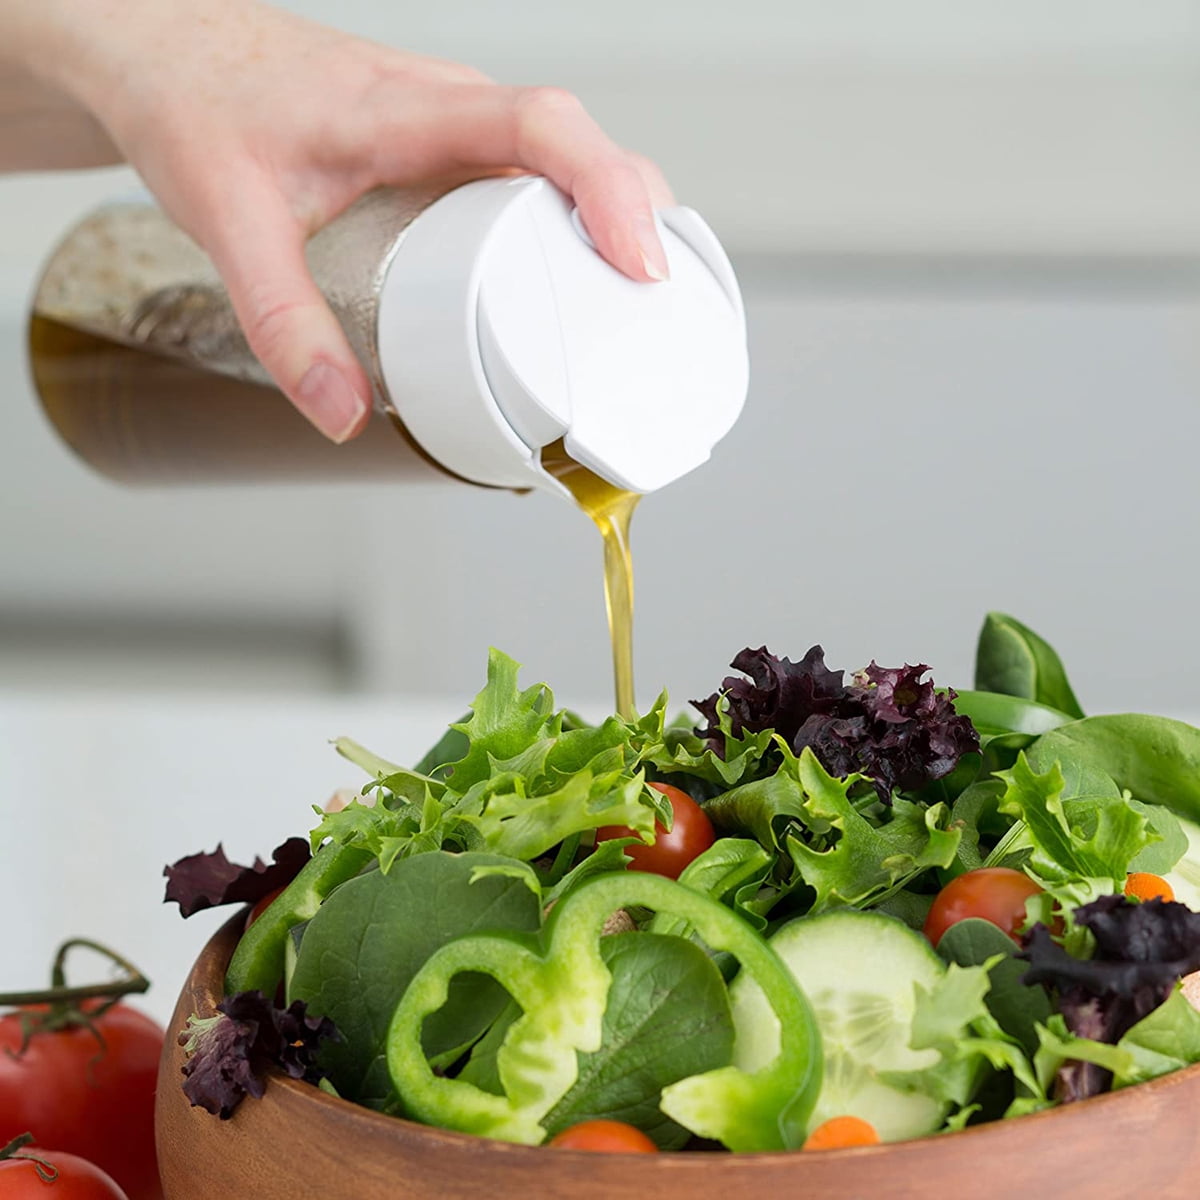 Salad Mixing Cup, Salad shaker Bottle, shaker bottle for salad dressing,  Salad Mixer Container, Safe…See more Salad Mixing Cup, Salad shaker Bottle